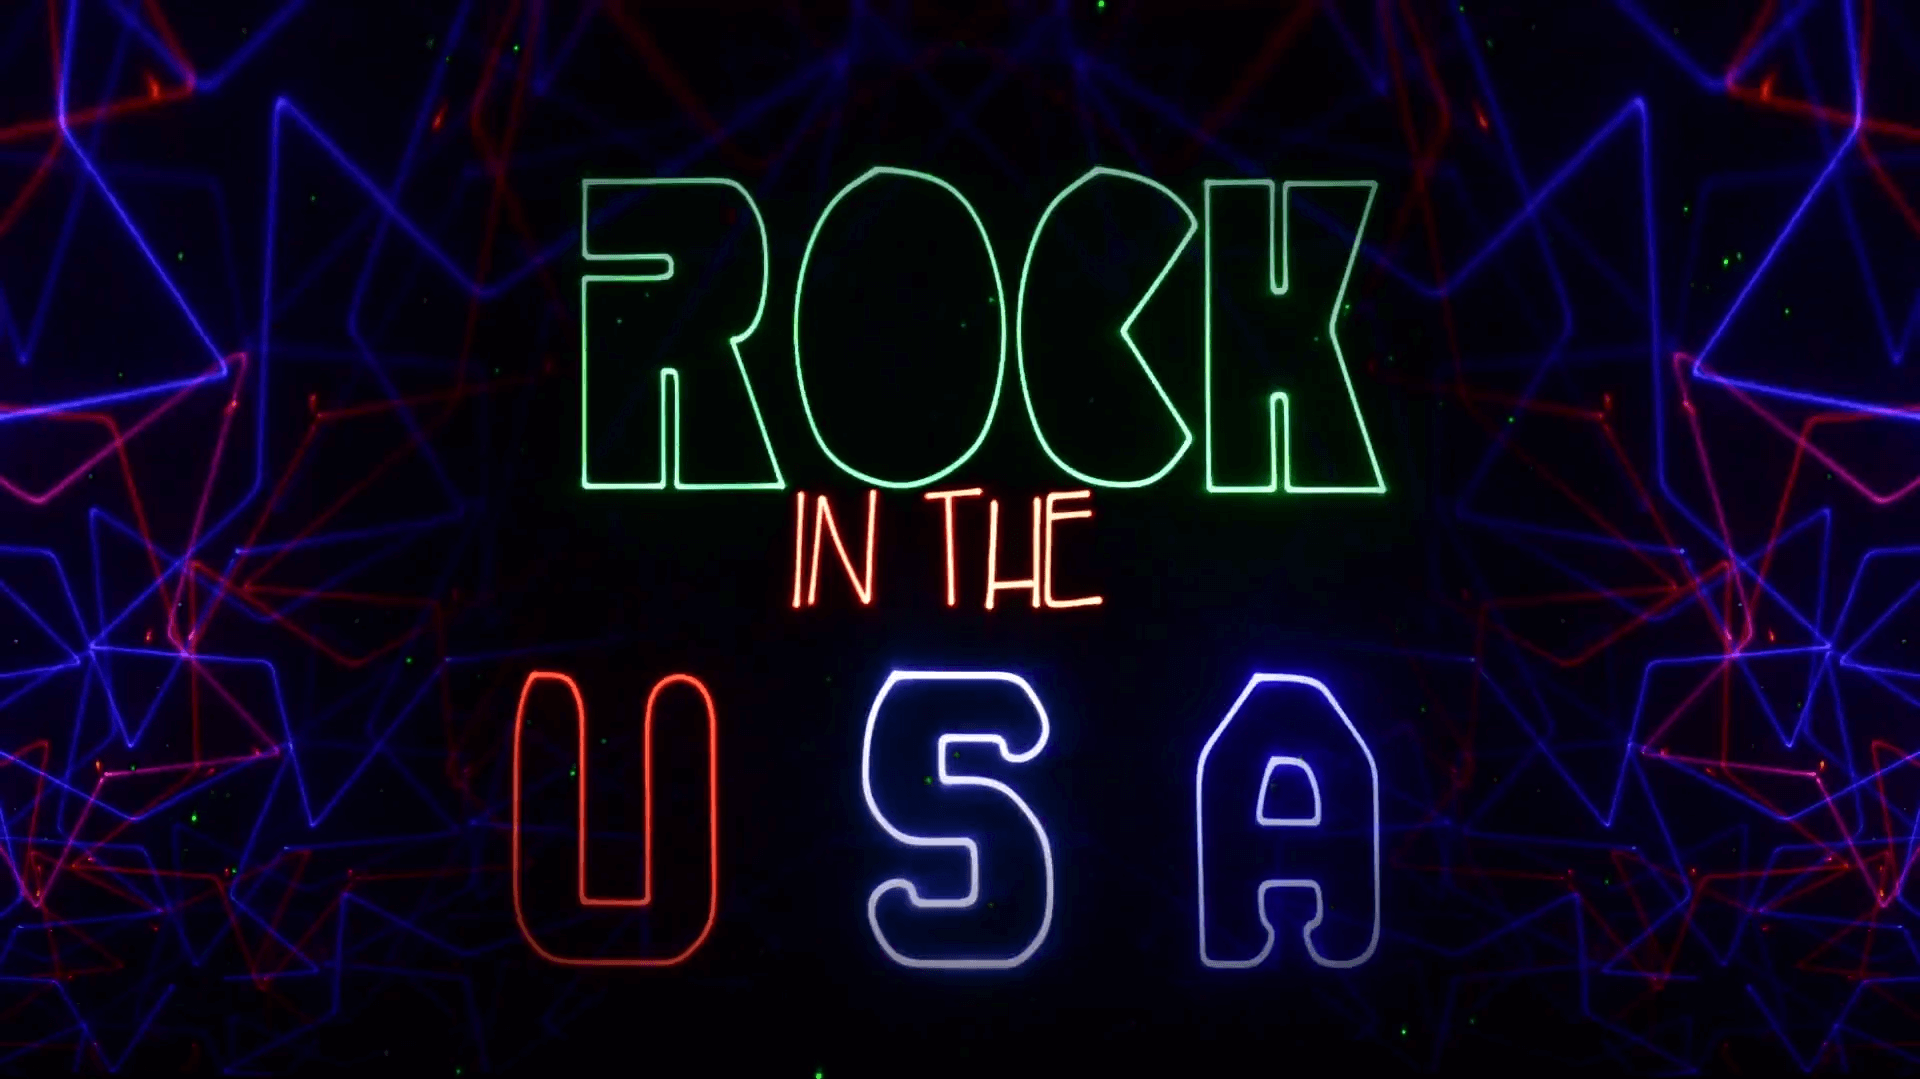 laser rock show